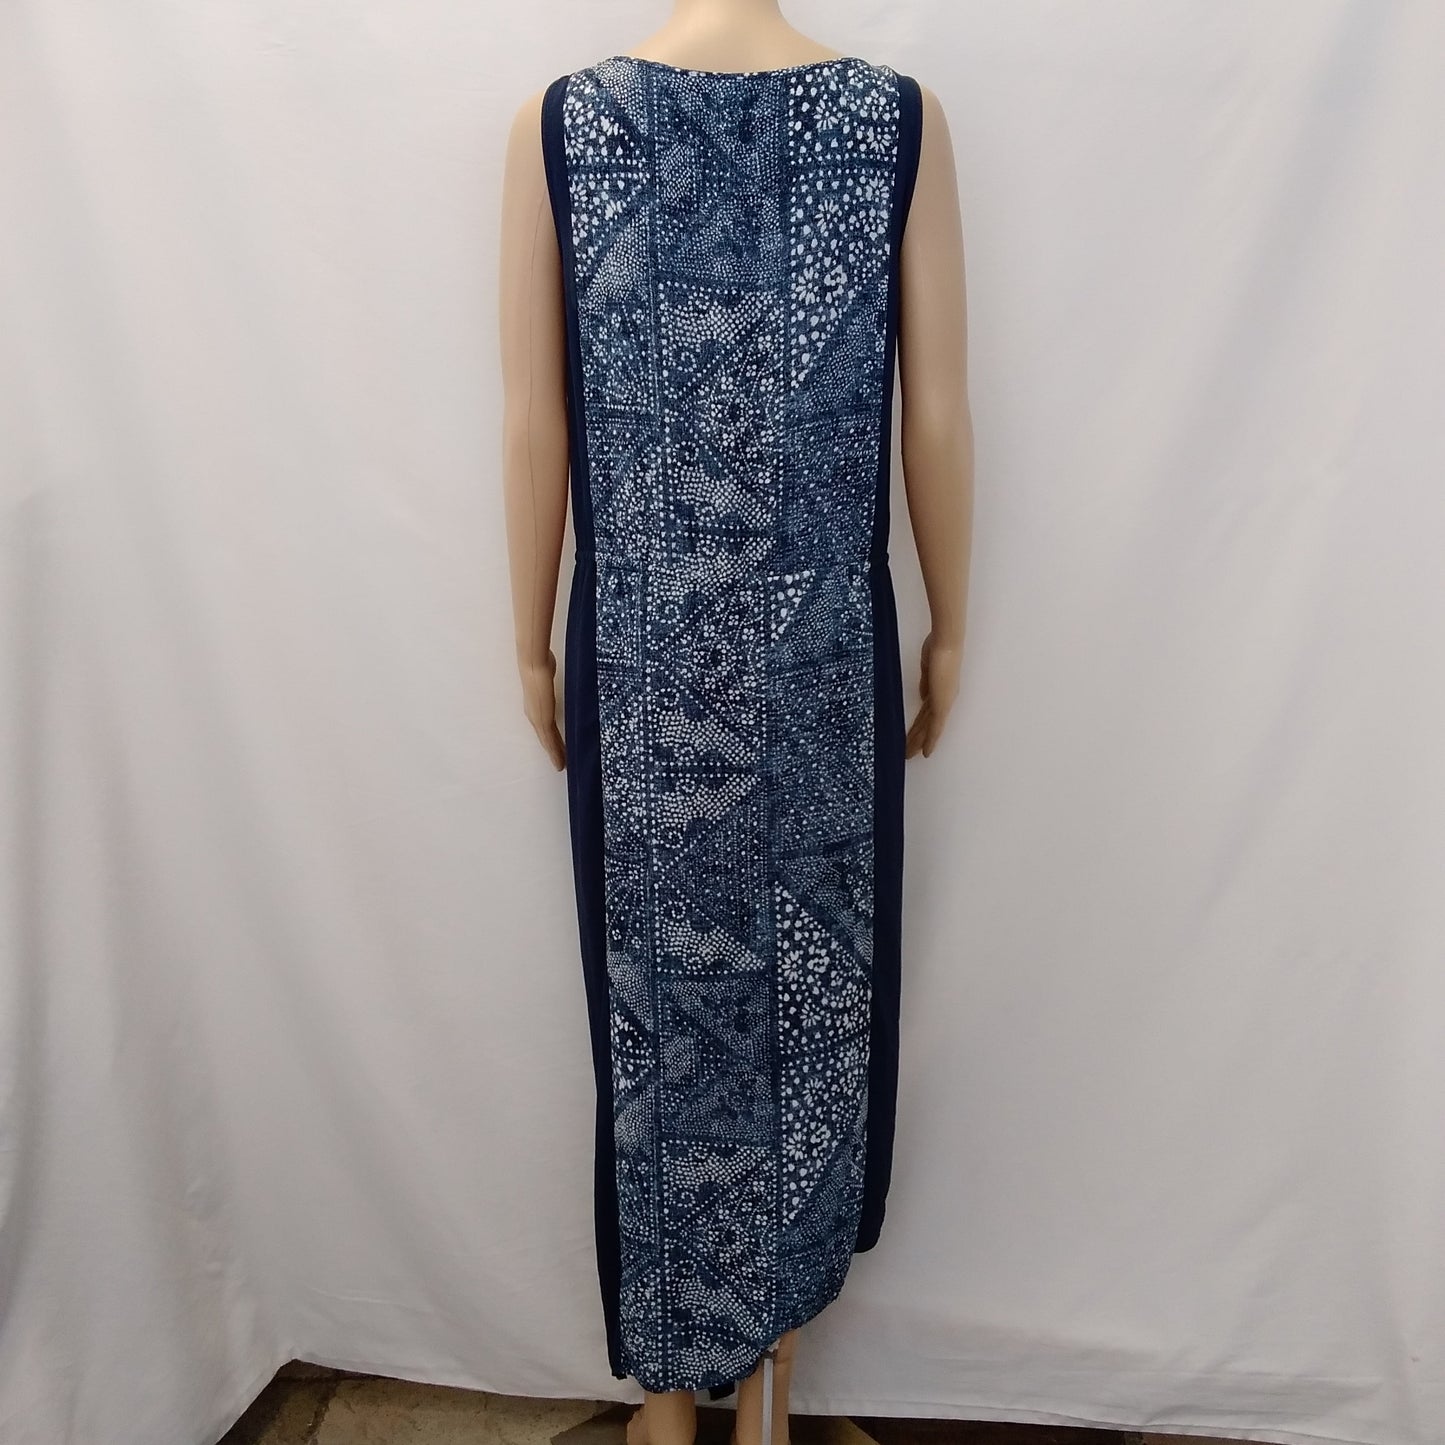 NWT - BCBG MAXAZRIA Asymmetrical Blue Dress - S